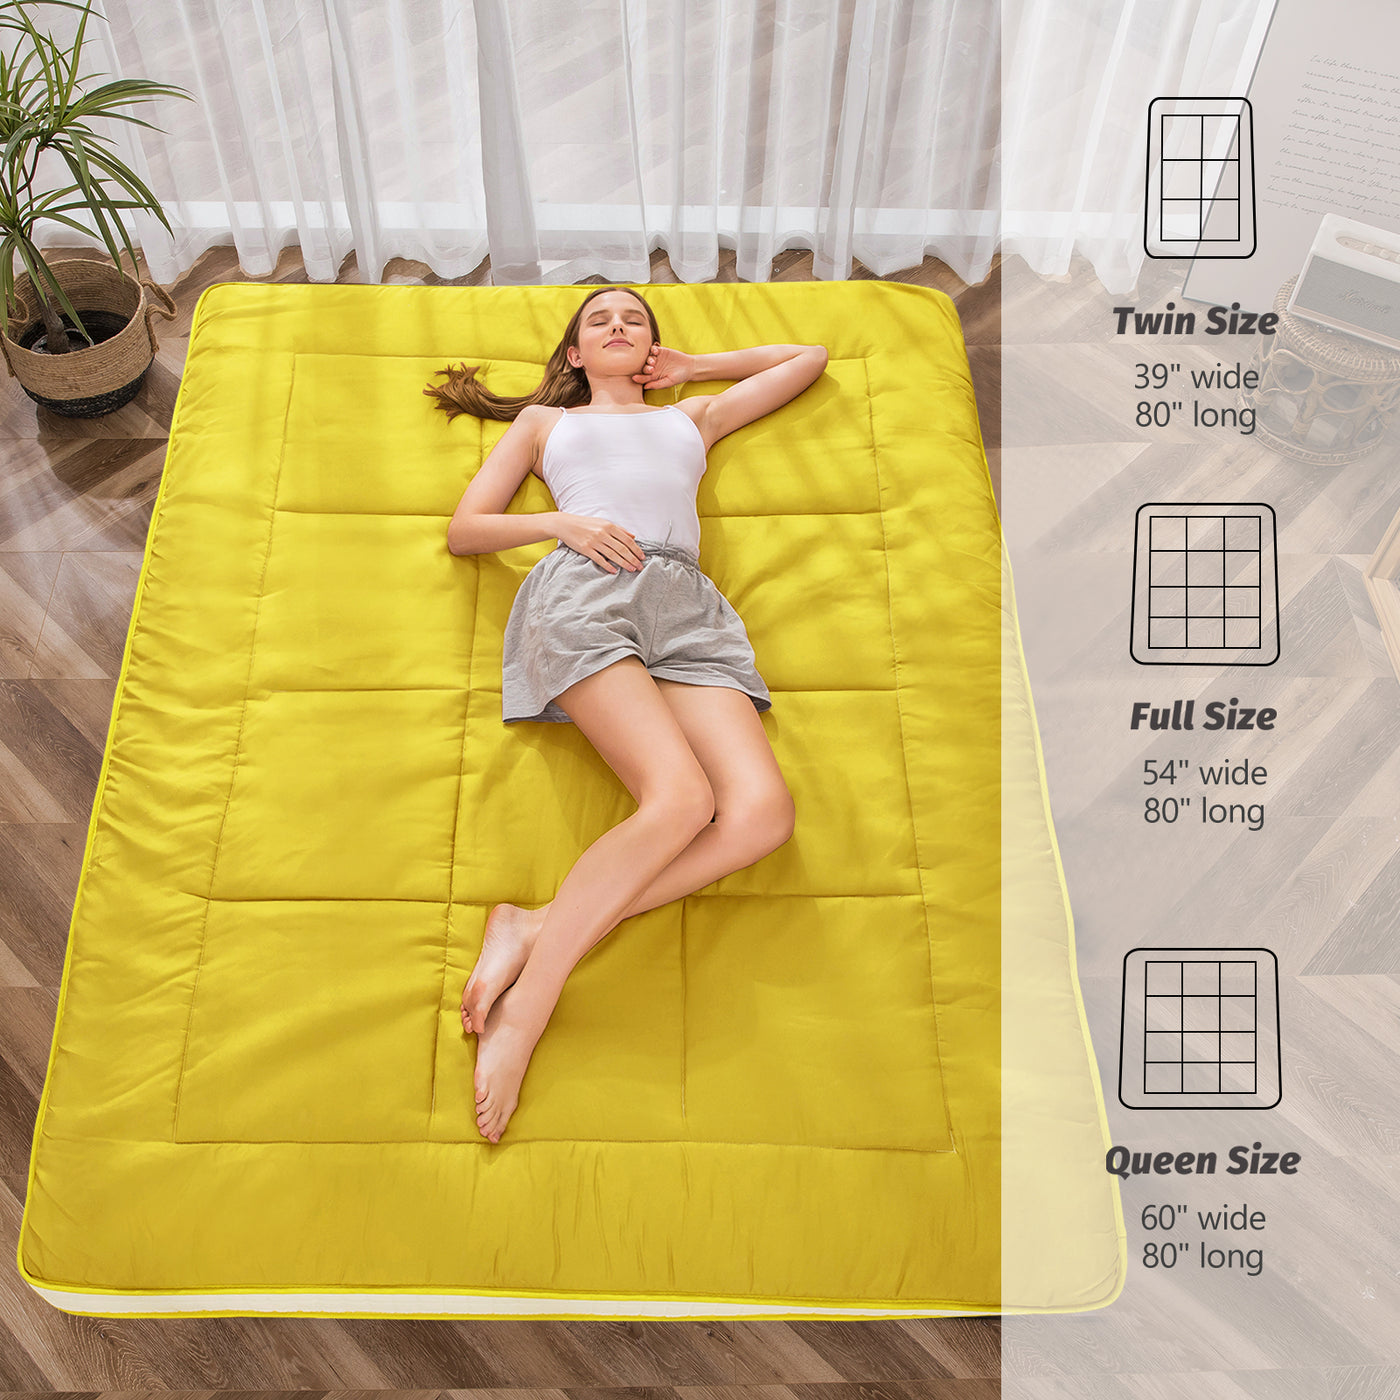 MAXYOYO Comfortable Square Futon Mattress Full Size, Bright Yellow